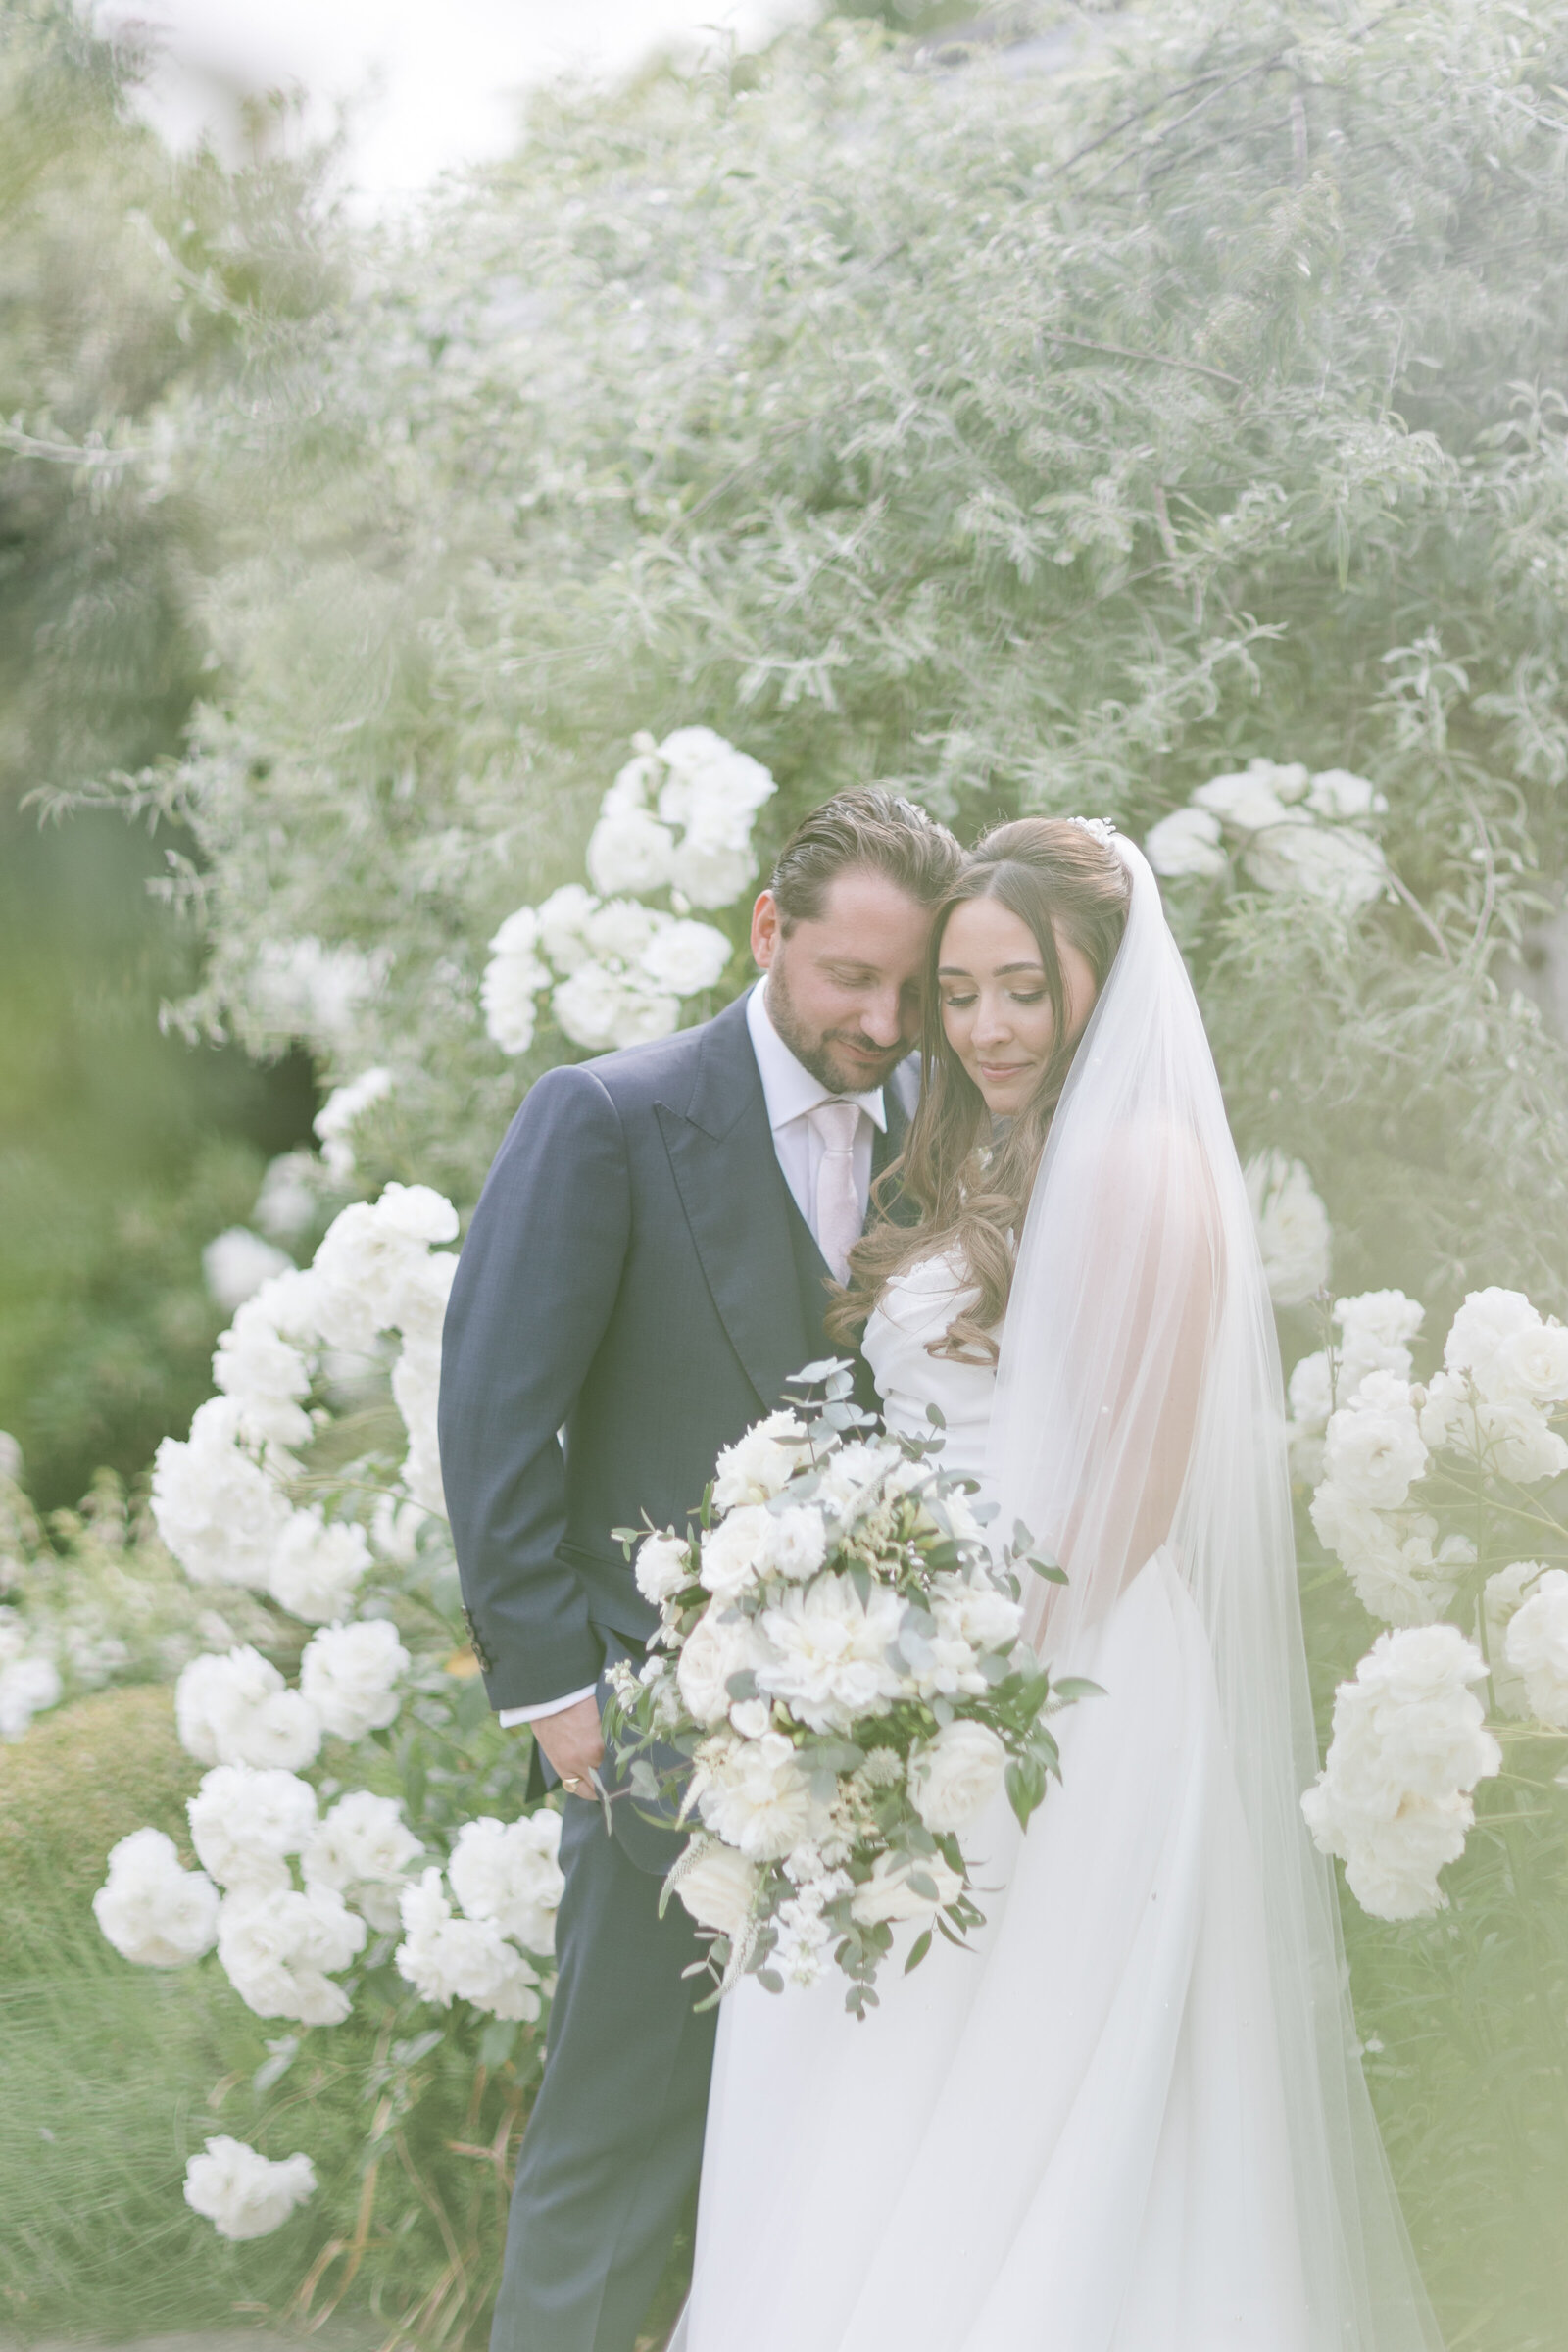 Tania + Darren wedding highlights 109 by Nicola Hudson